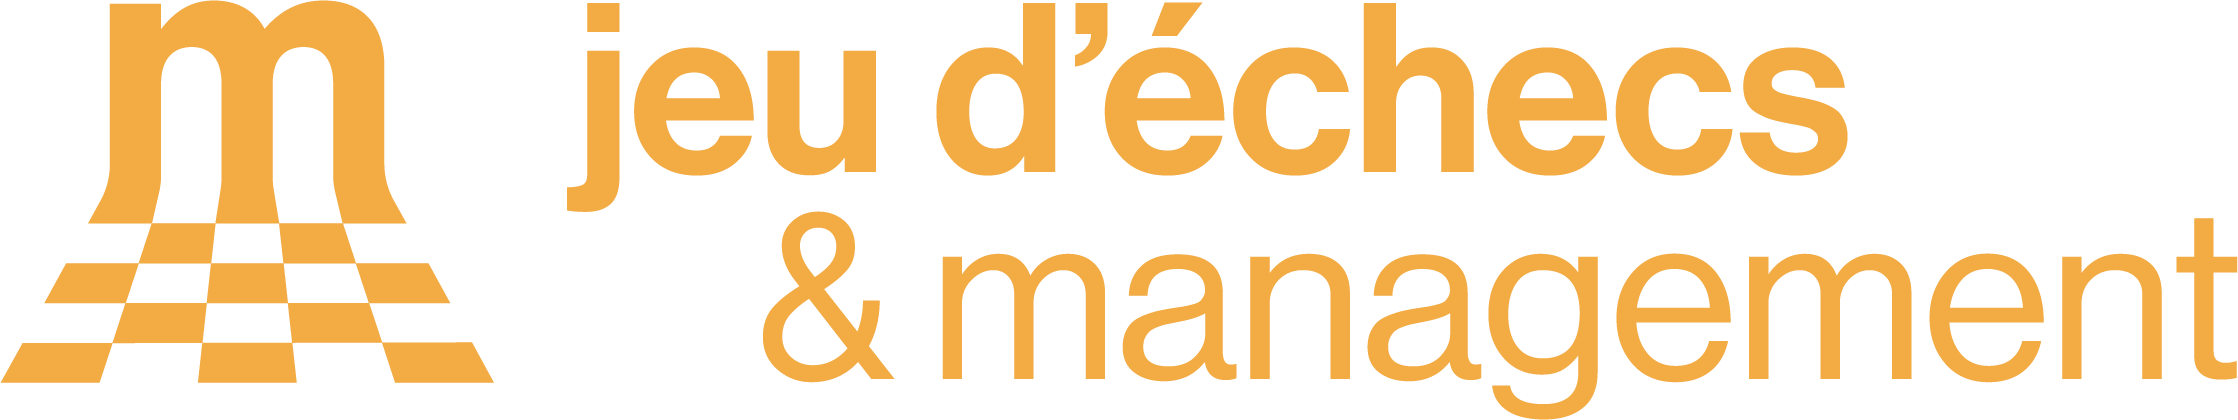 logo_echecs_management